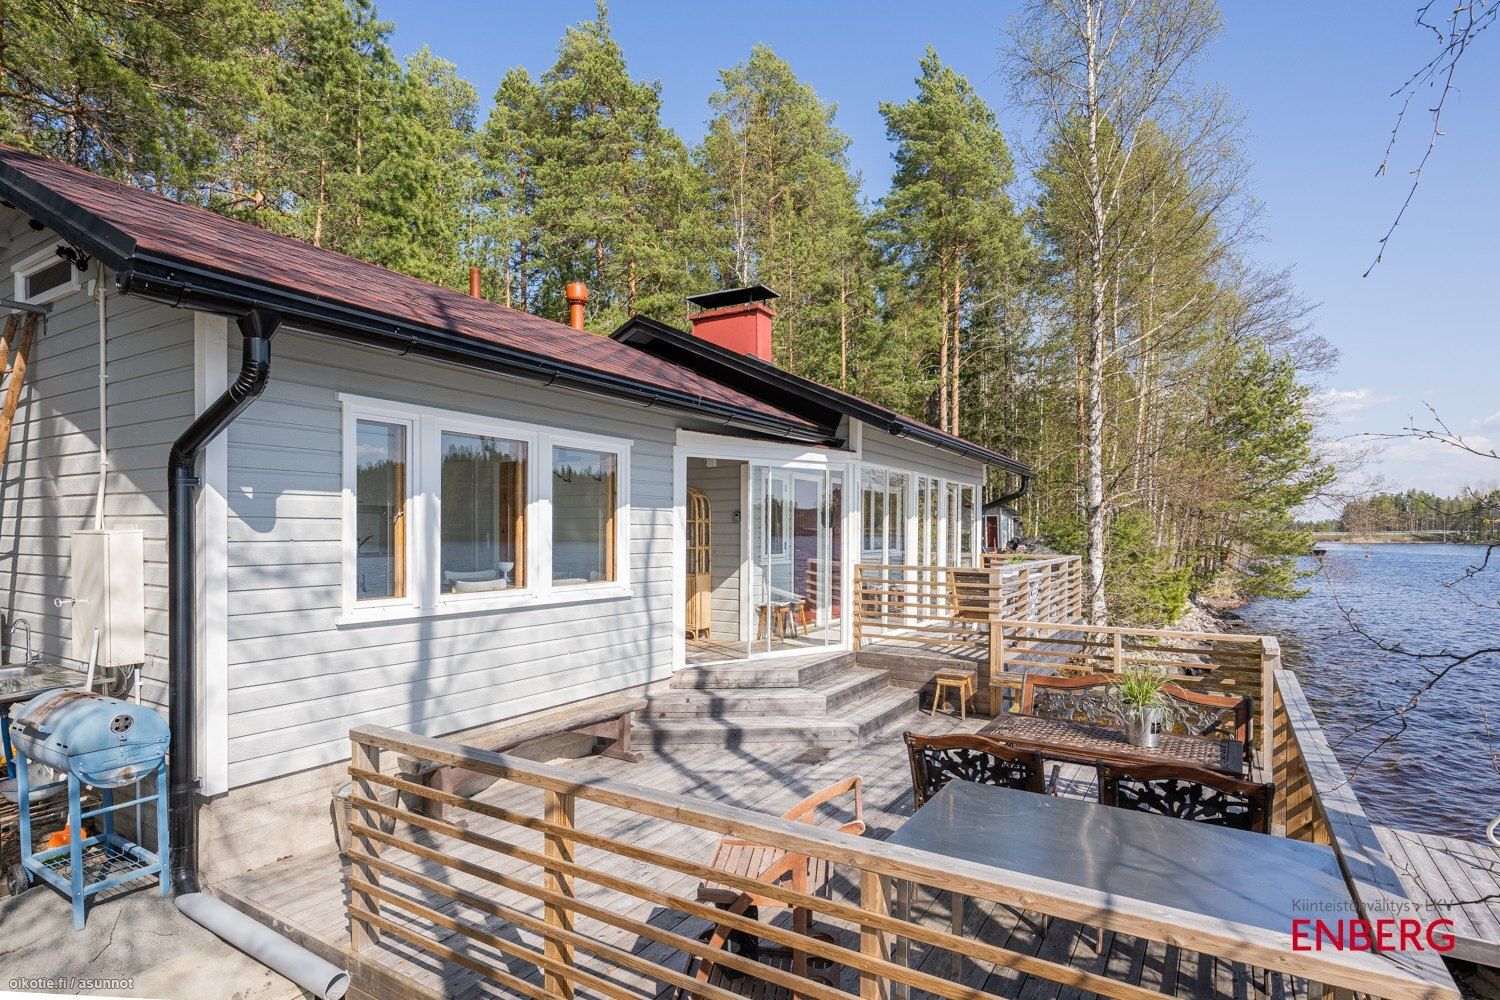 31 m² Vespuolentie 490, 41800 Jyväskylä  Tupa+huone+vesi-WC+suihku+pkh+sauna+varastorak+ulko-WC+maakellari – Oikotie  17300768 – SKVL